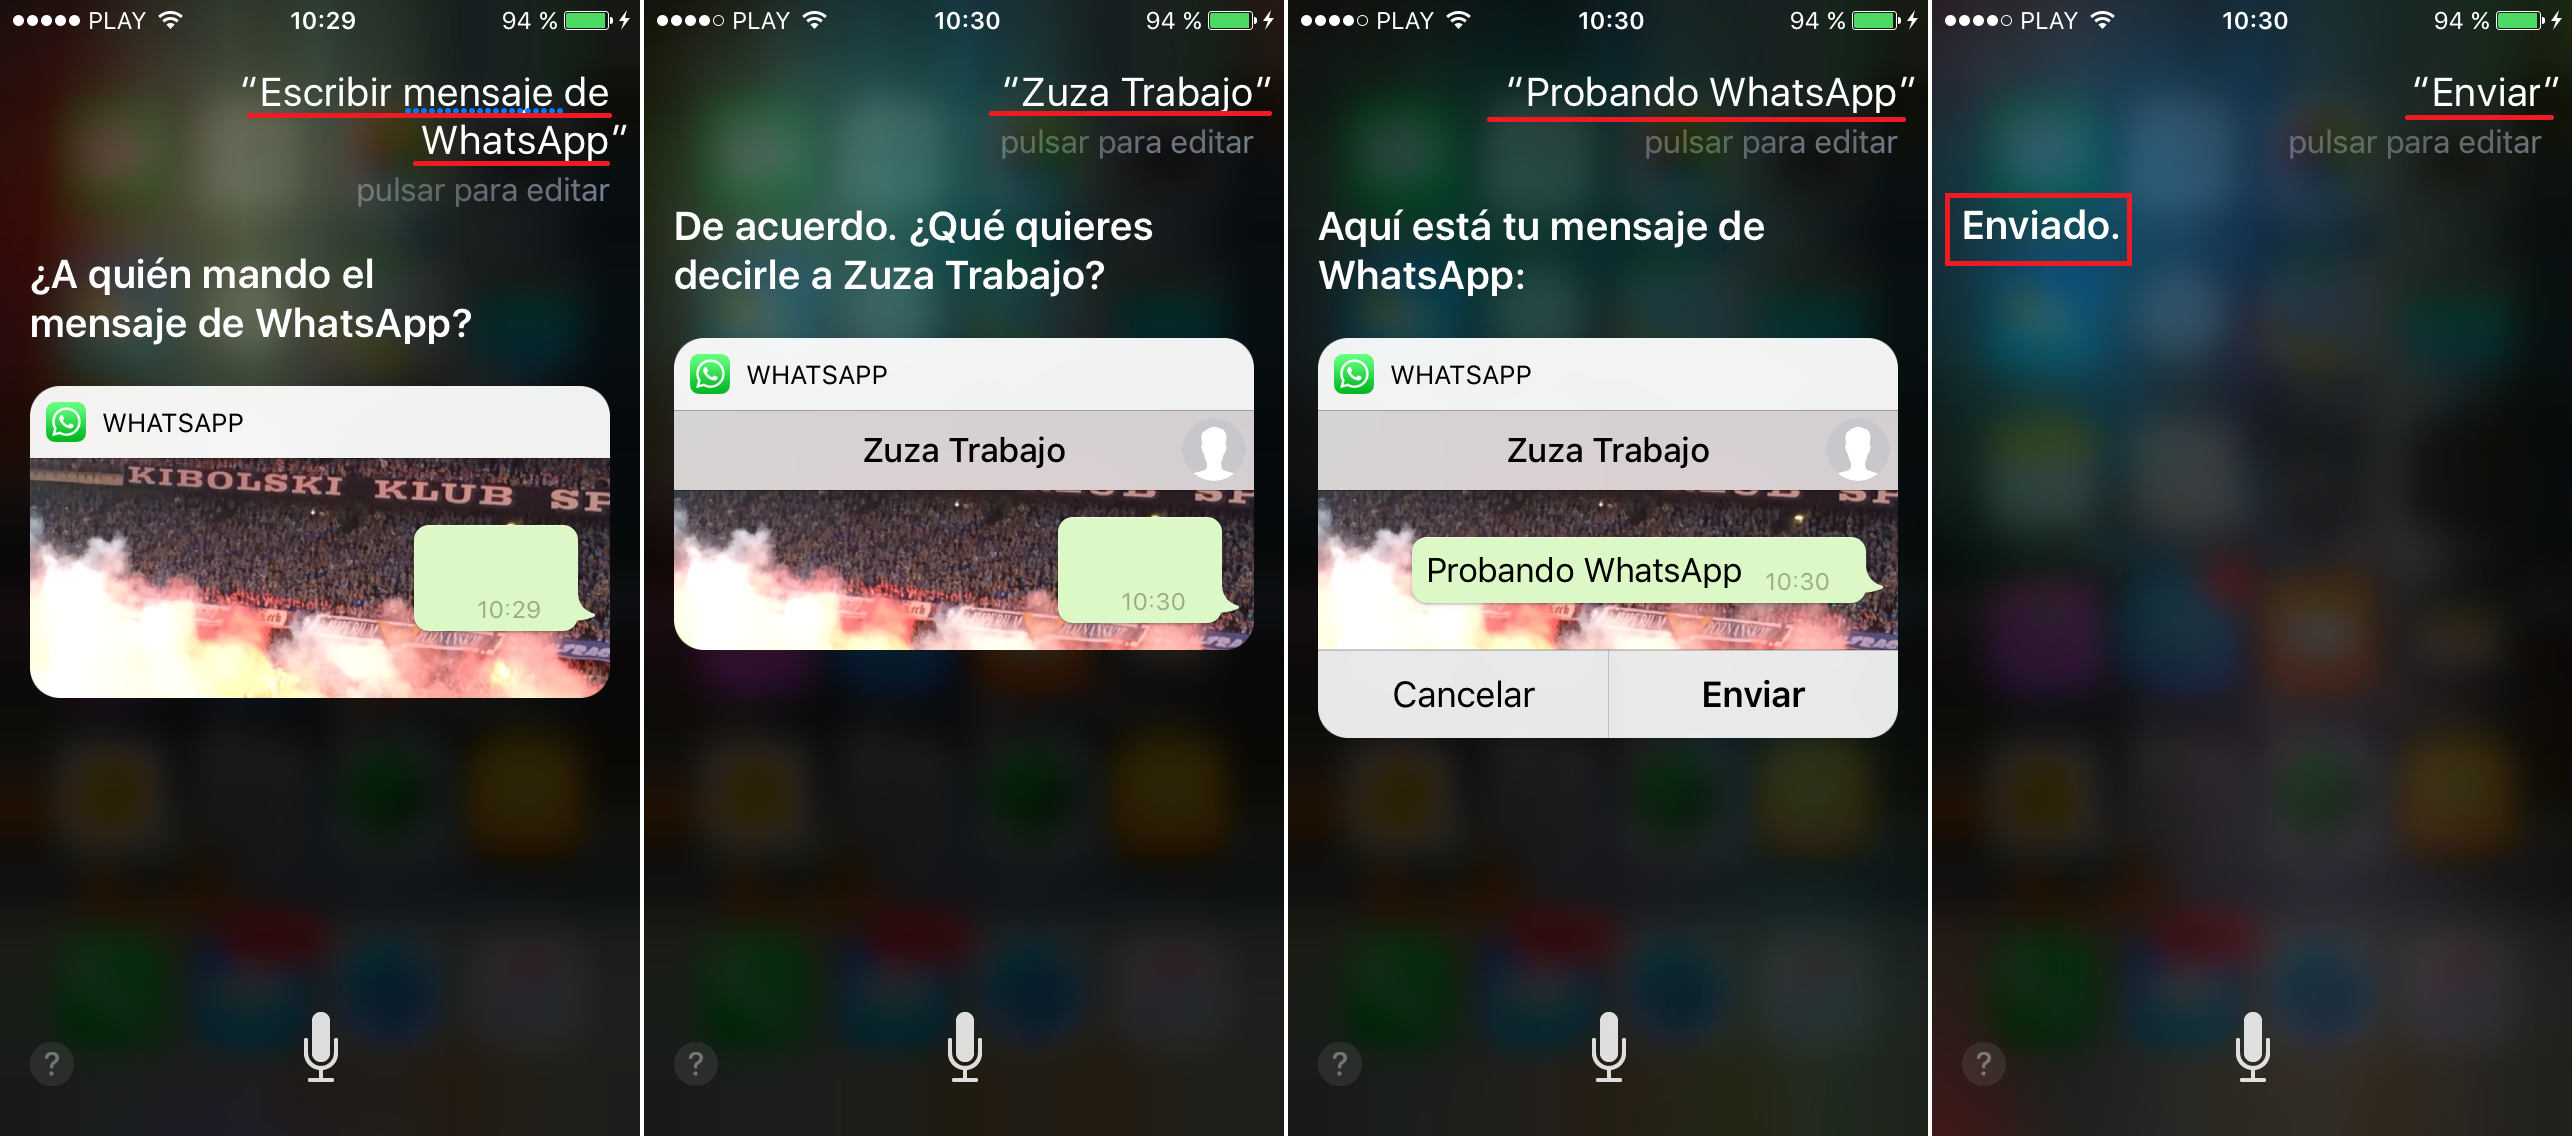 Como enviar mensajes de Whatsapp con la voz usando Siri de iOS 10